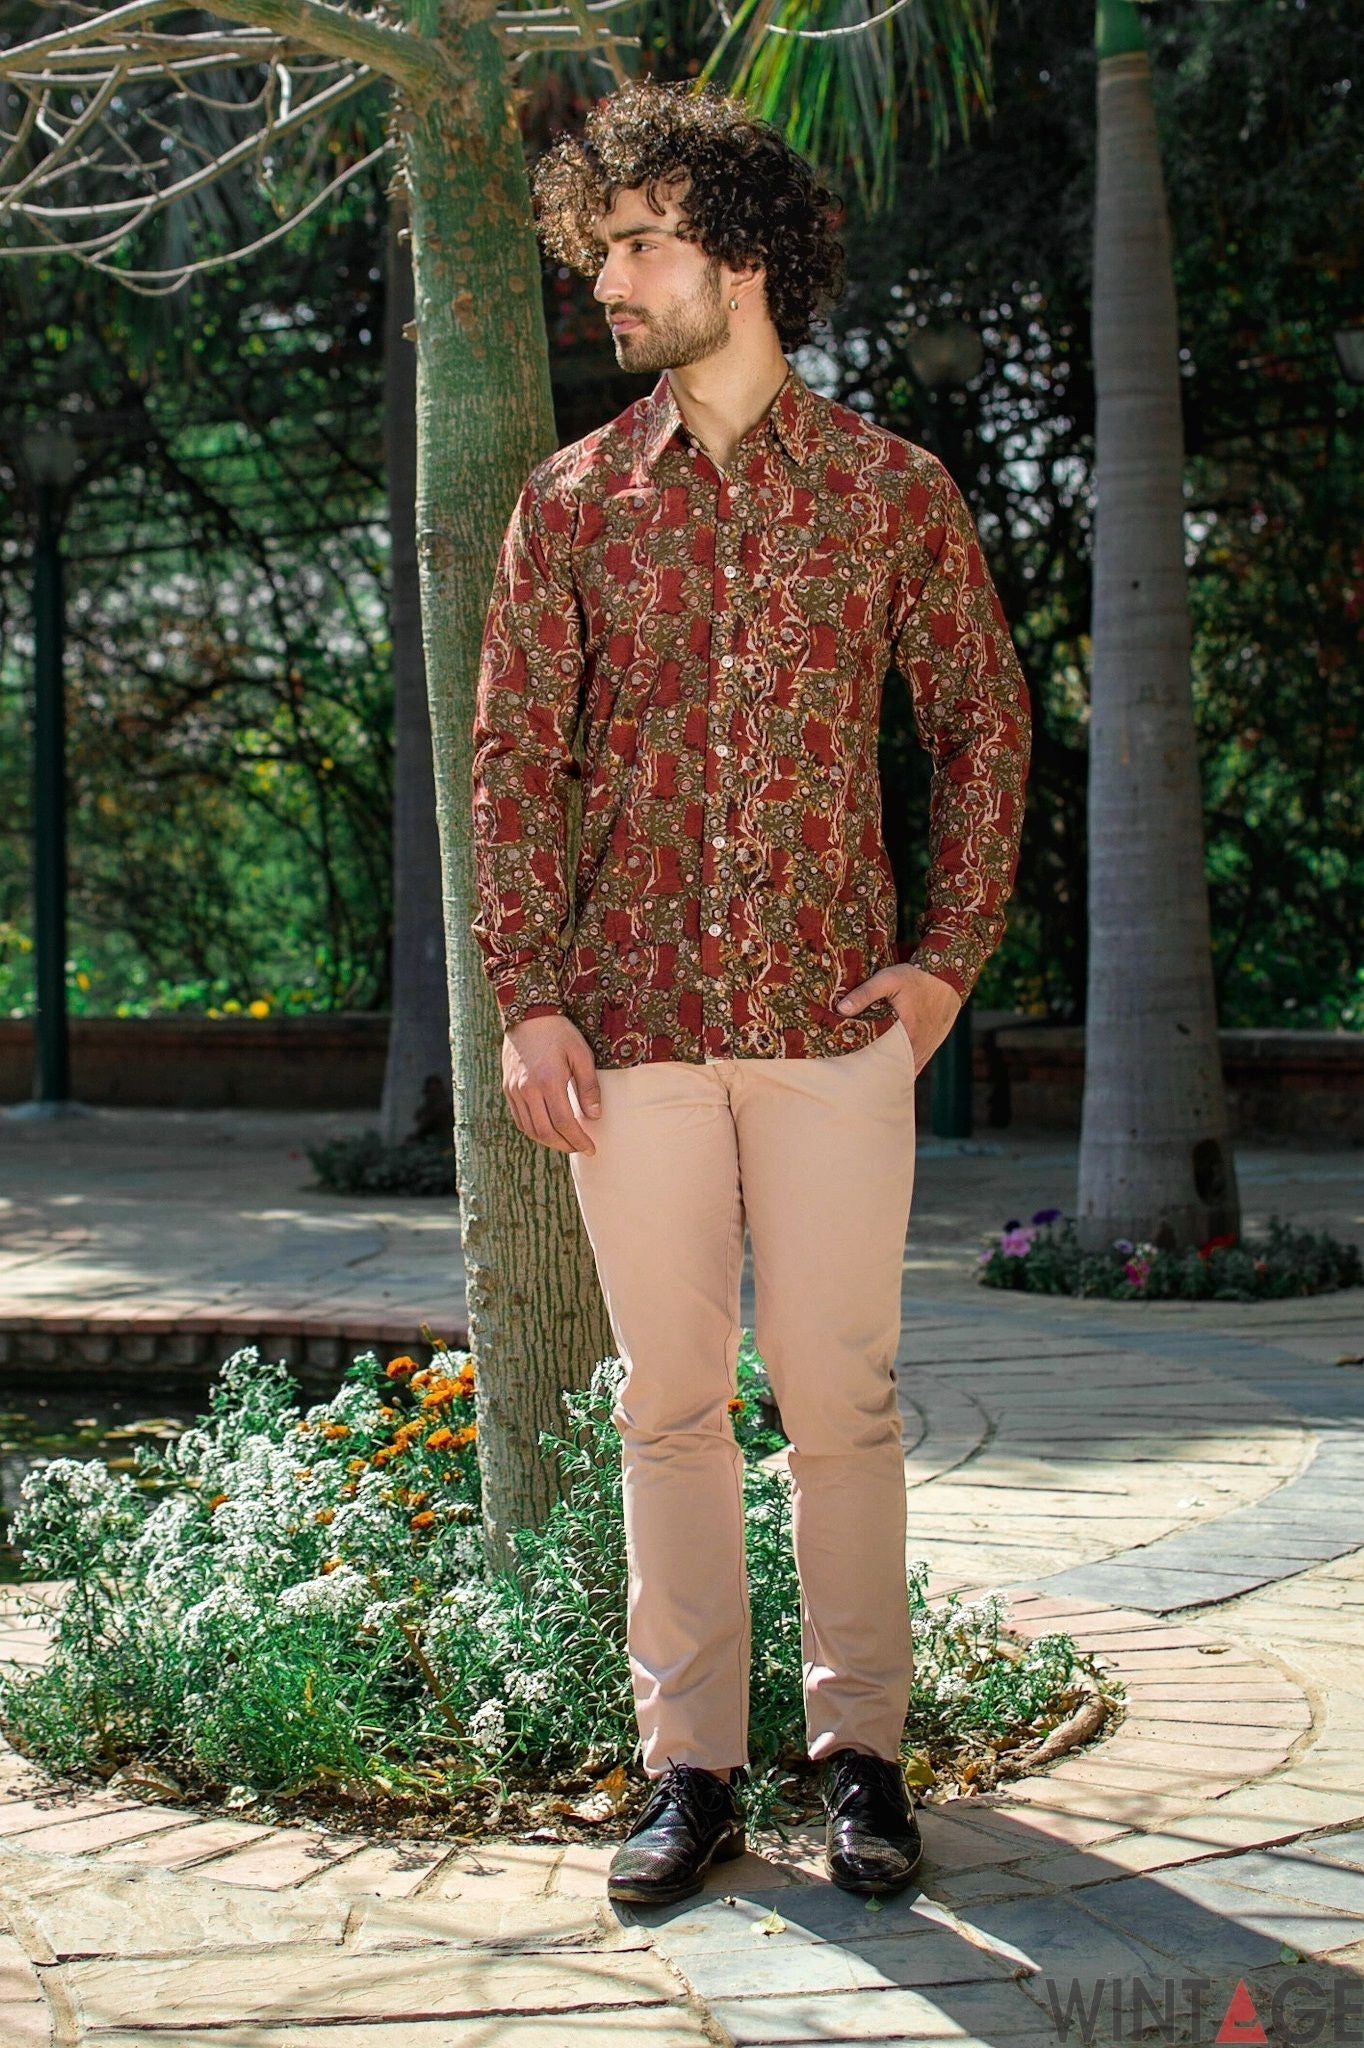 Jaipur 100% Cotton Red Floral Full Shirt